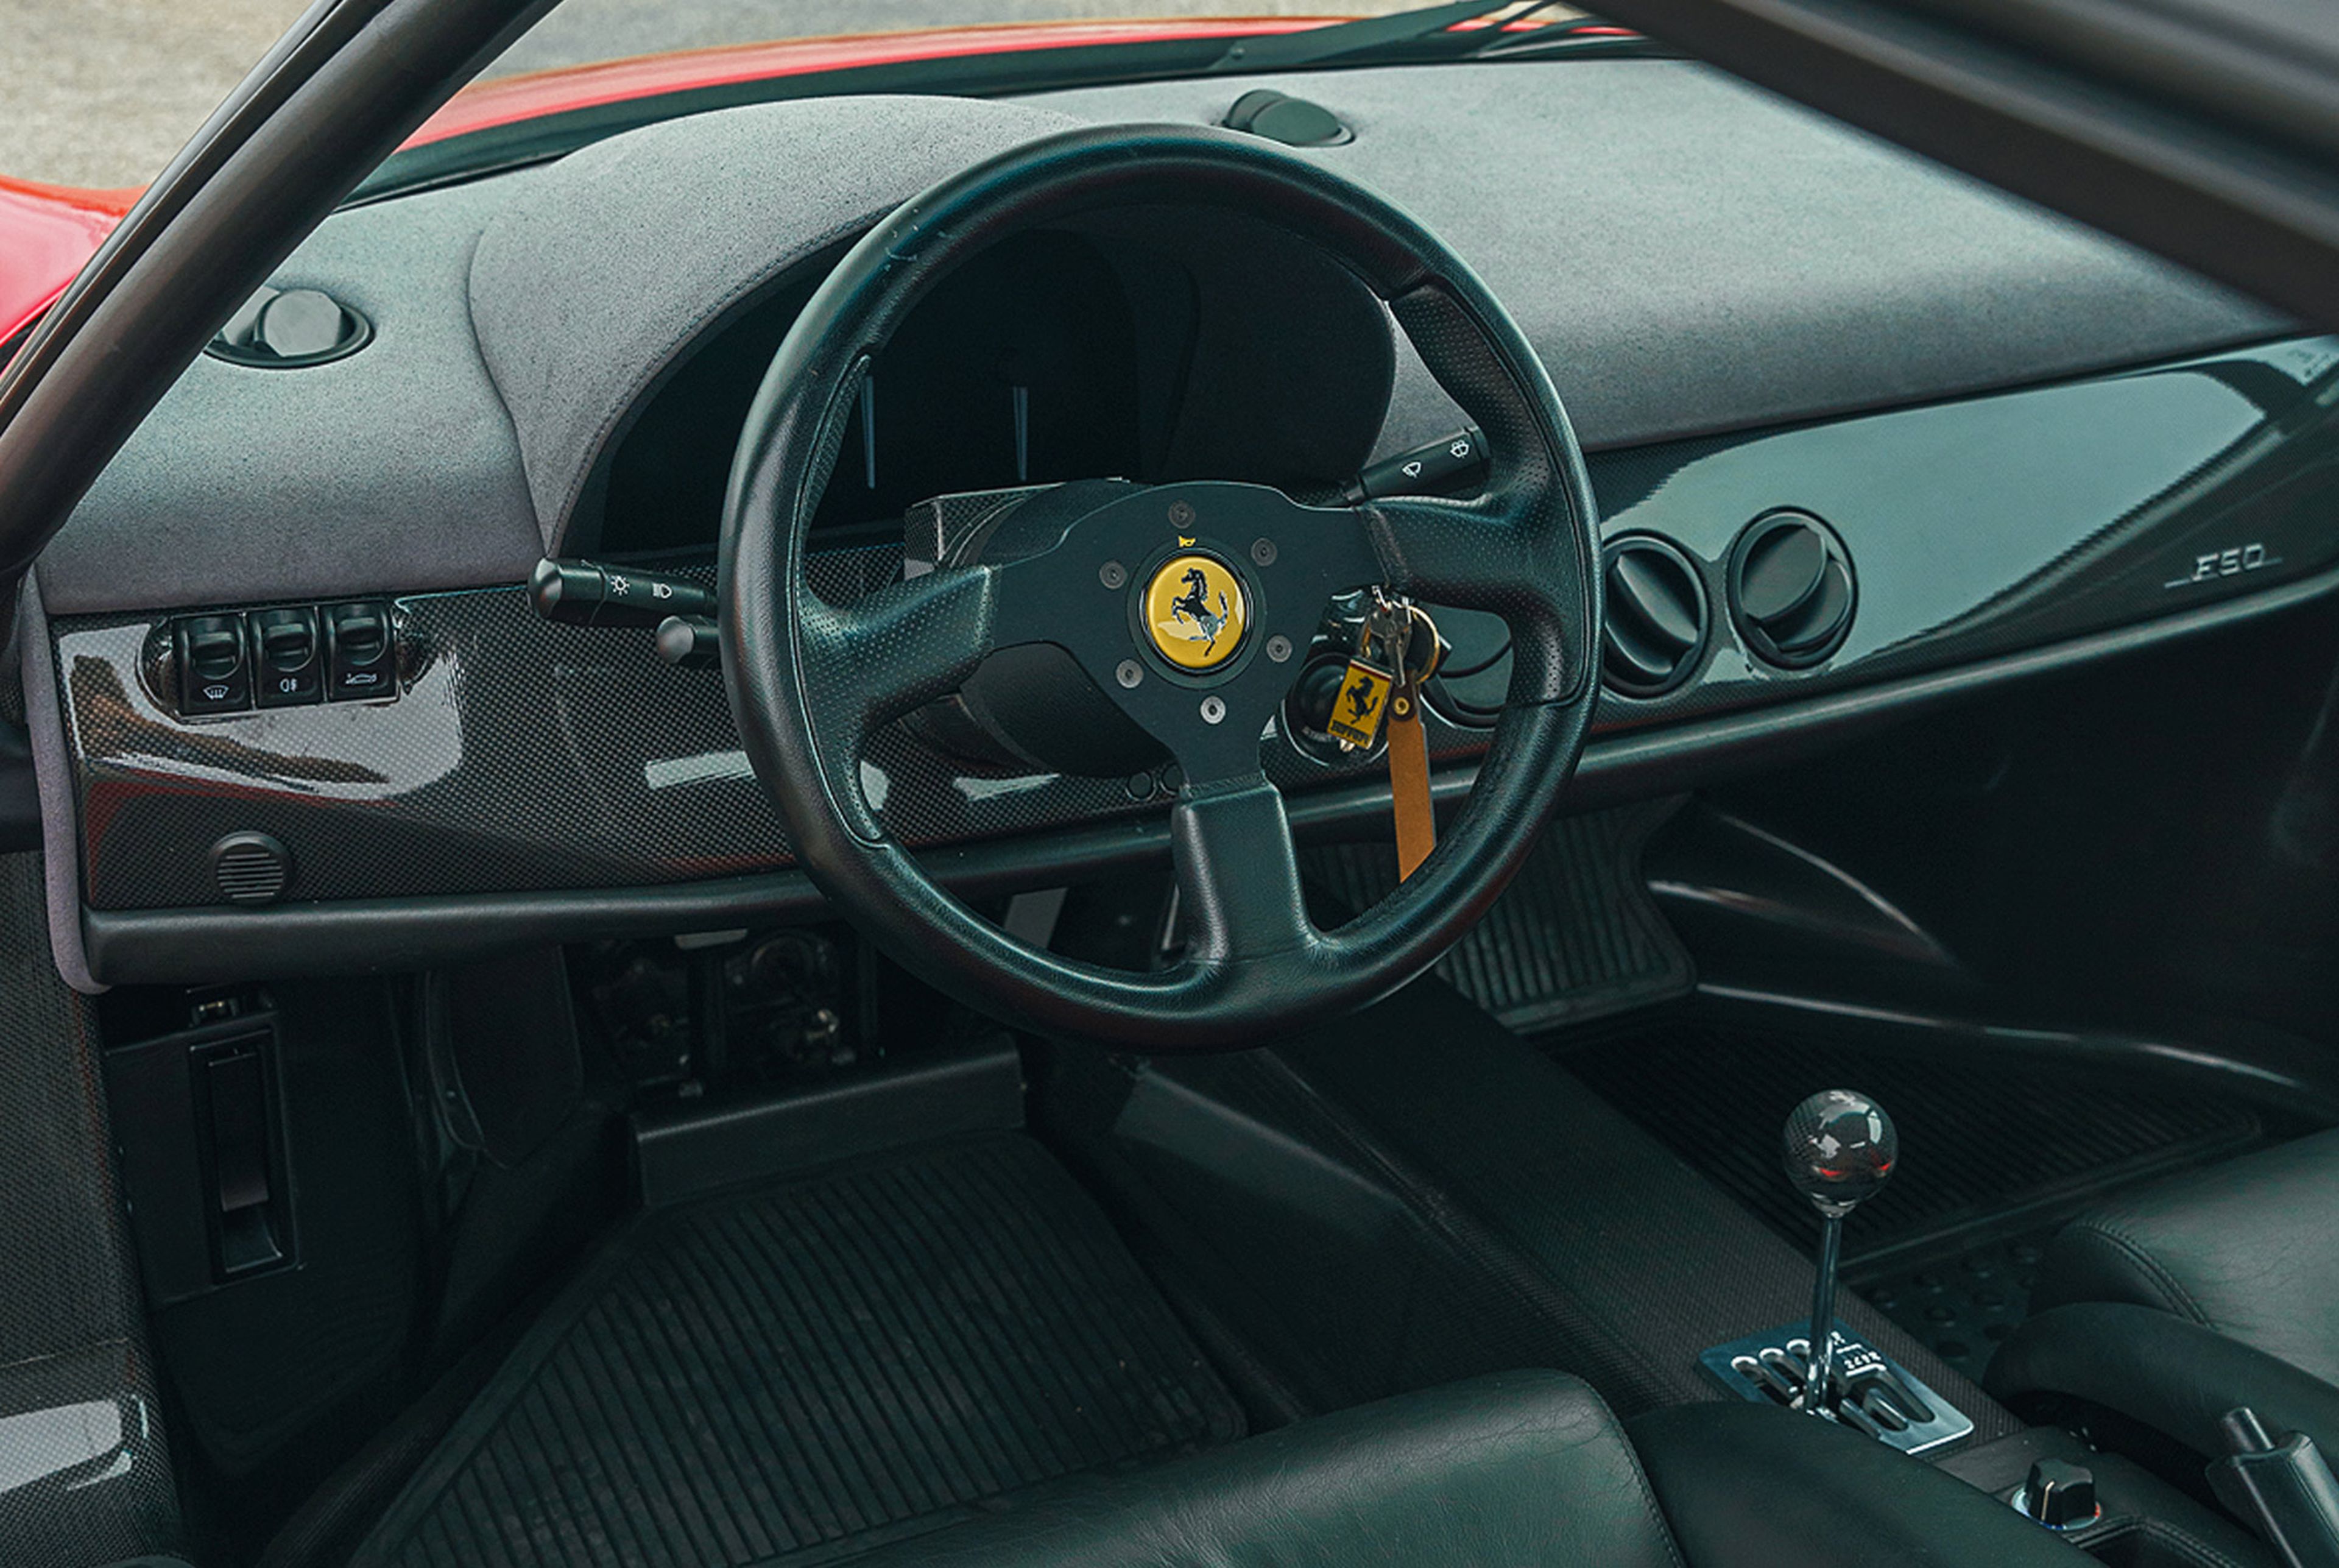 Ferrari F40 cockpit